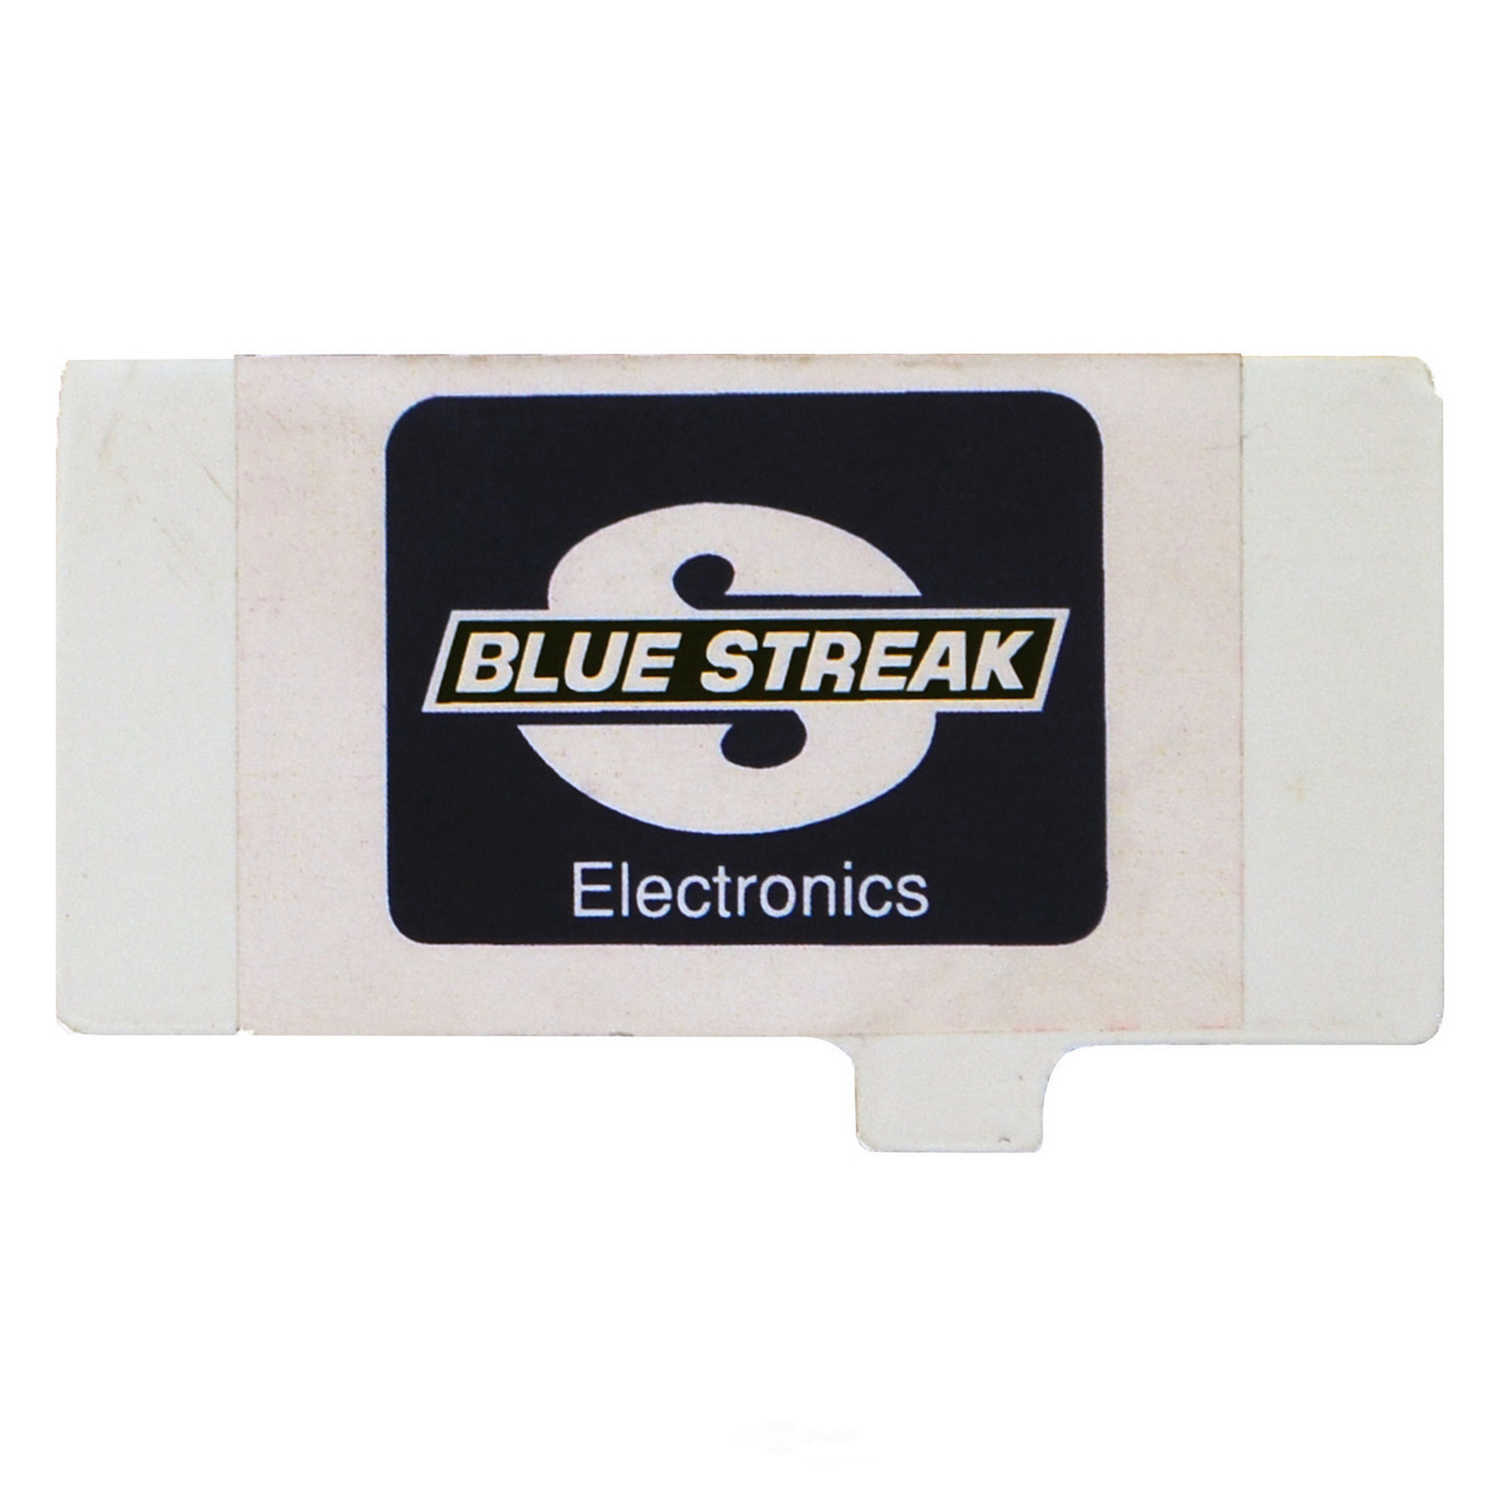 BLUE STREAK ELECTRONICS NEW - Blue Streak Electronics Premium Quality - New - BSN MF14383N